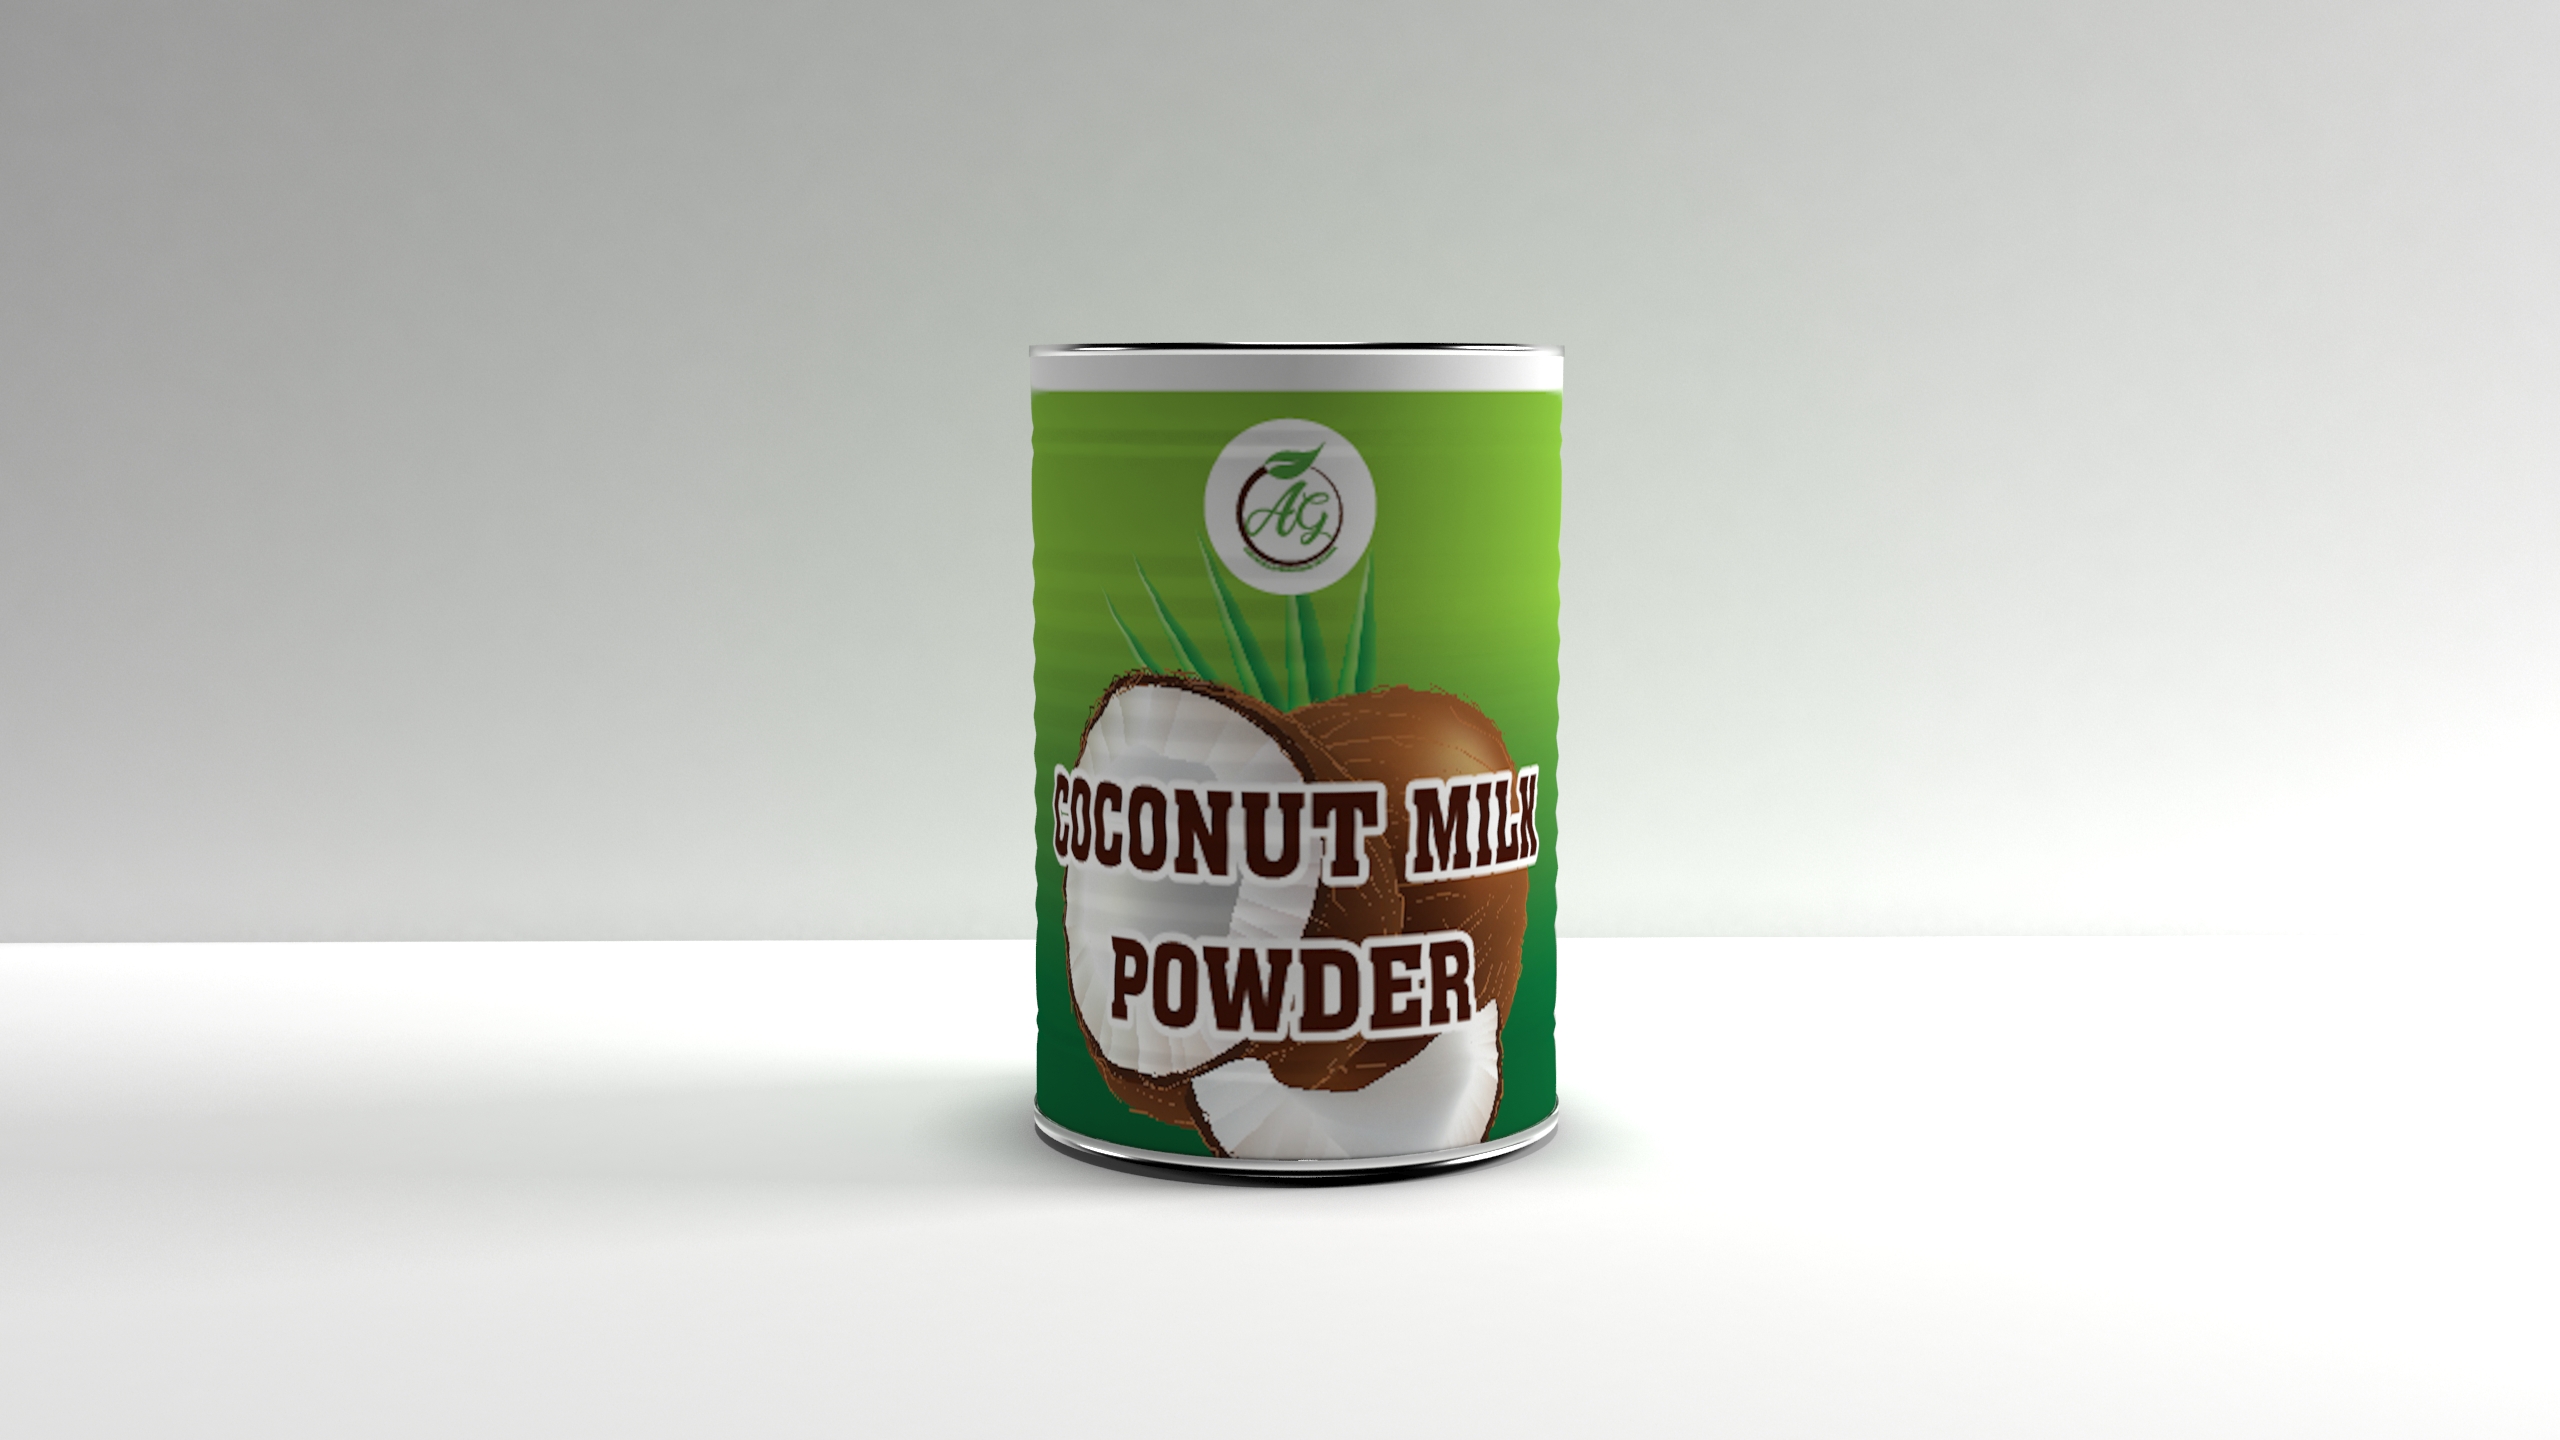 Coconut Milk powder